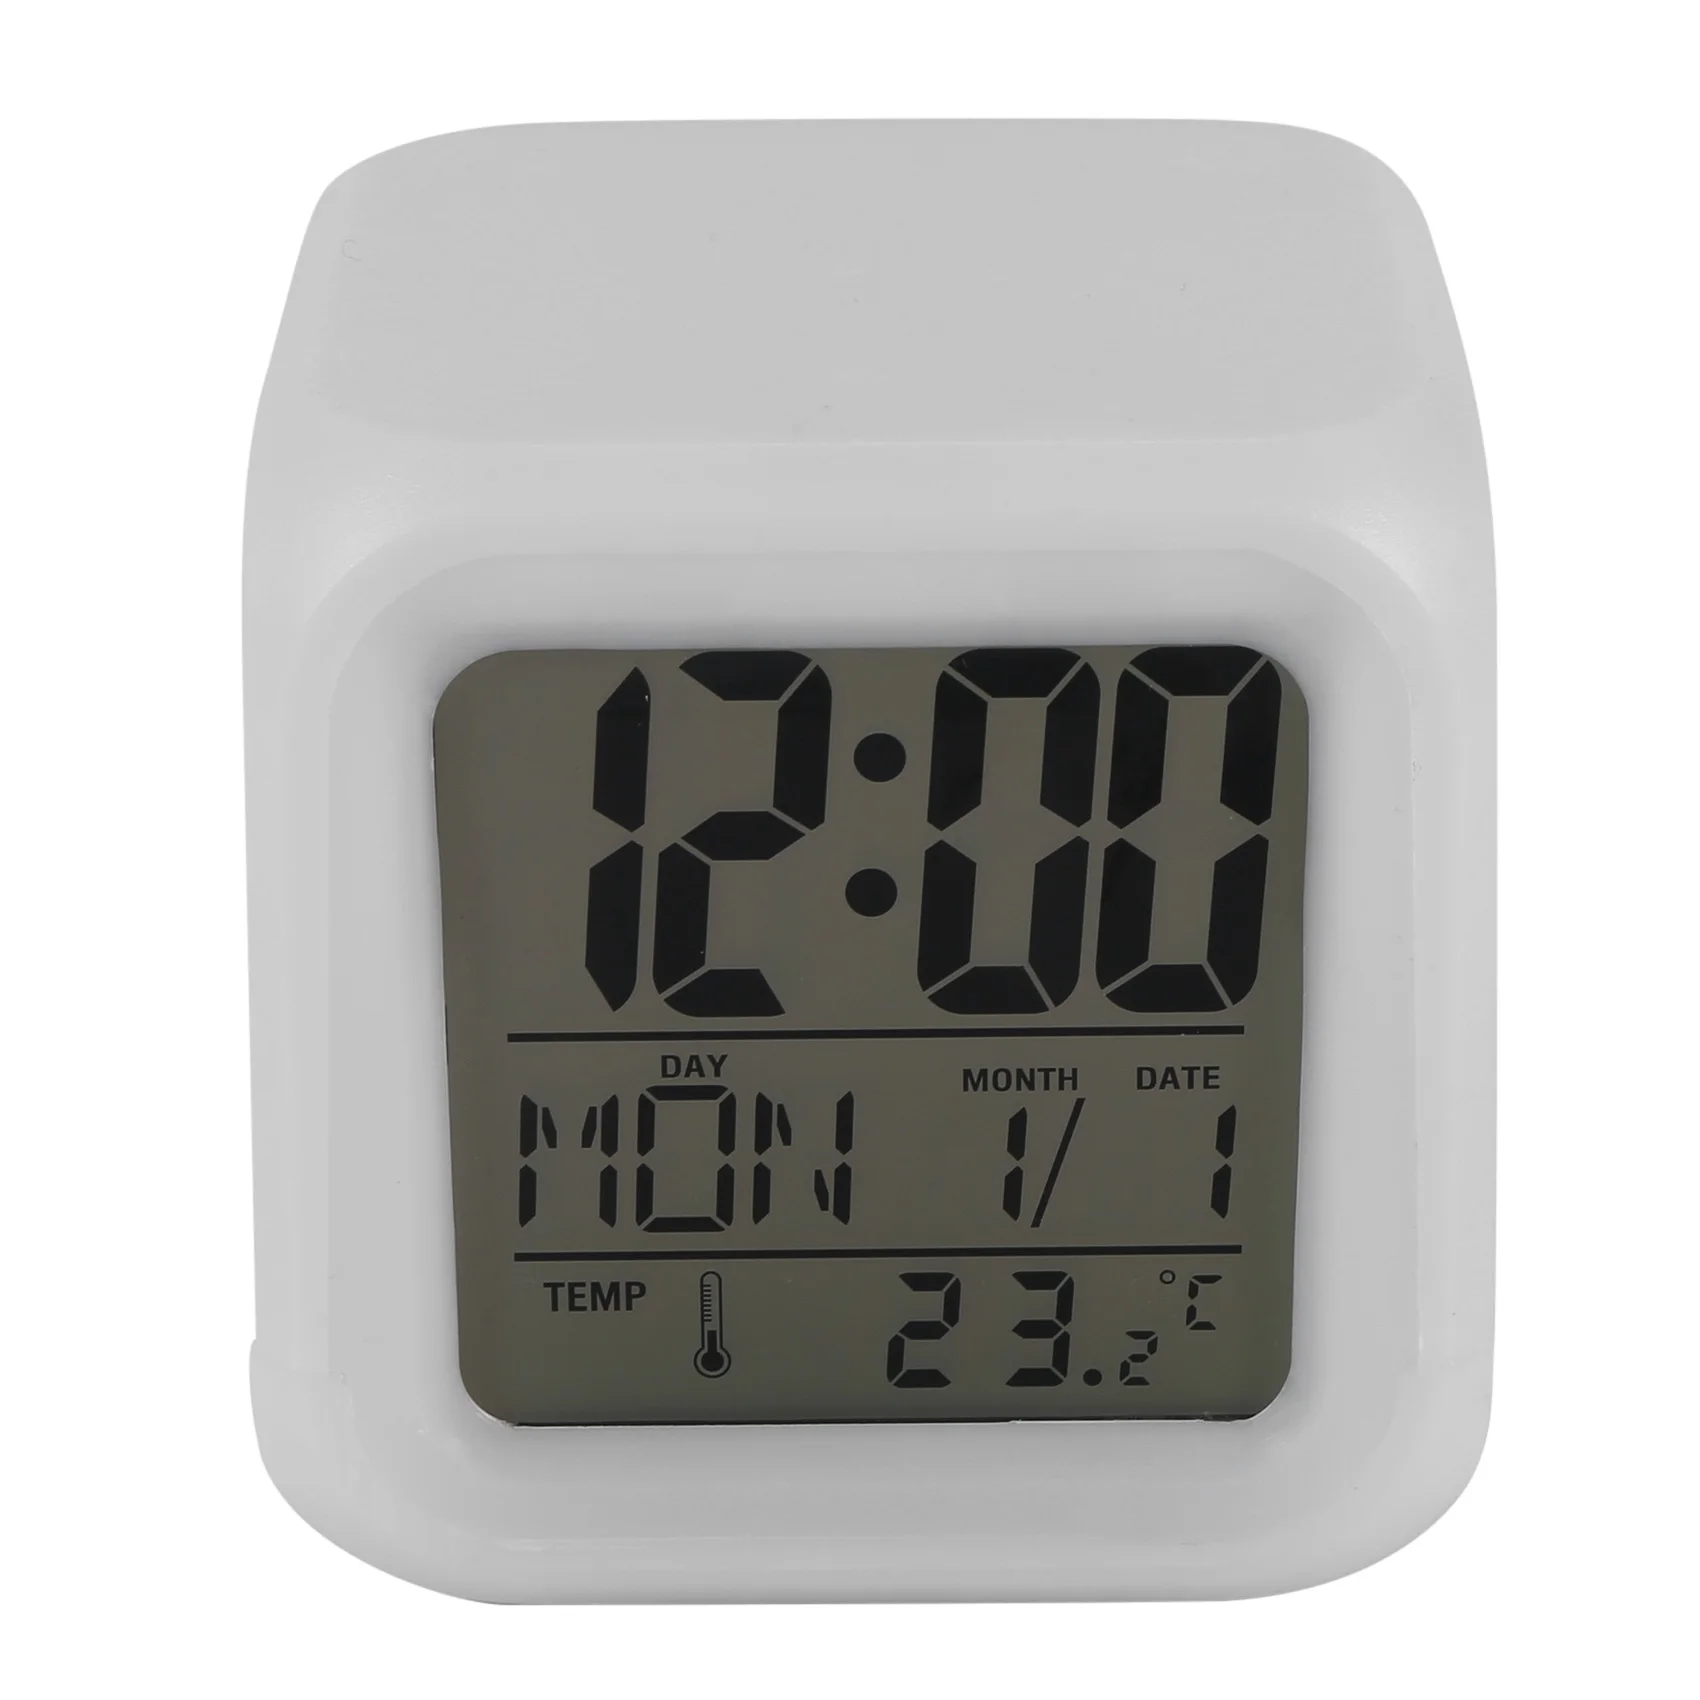 

Alarm Clock Digital Travel for Bedroom Boy Girl,Small Desk Bedside Clocks,Display Time/Date LED Night Light with Snooze